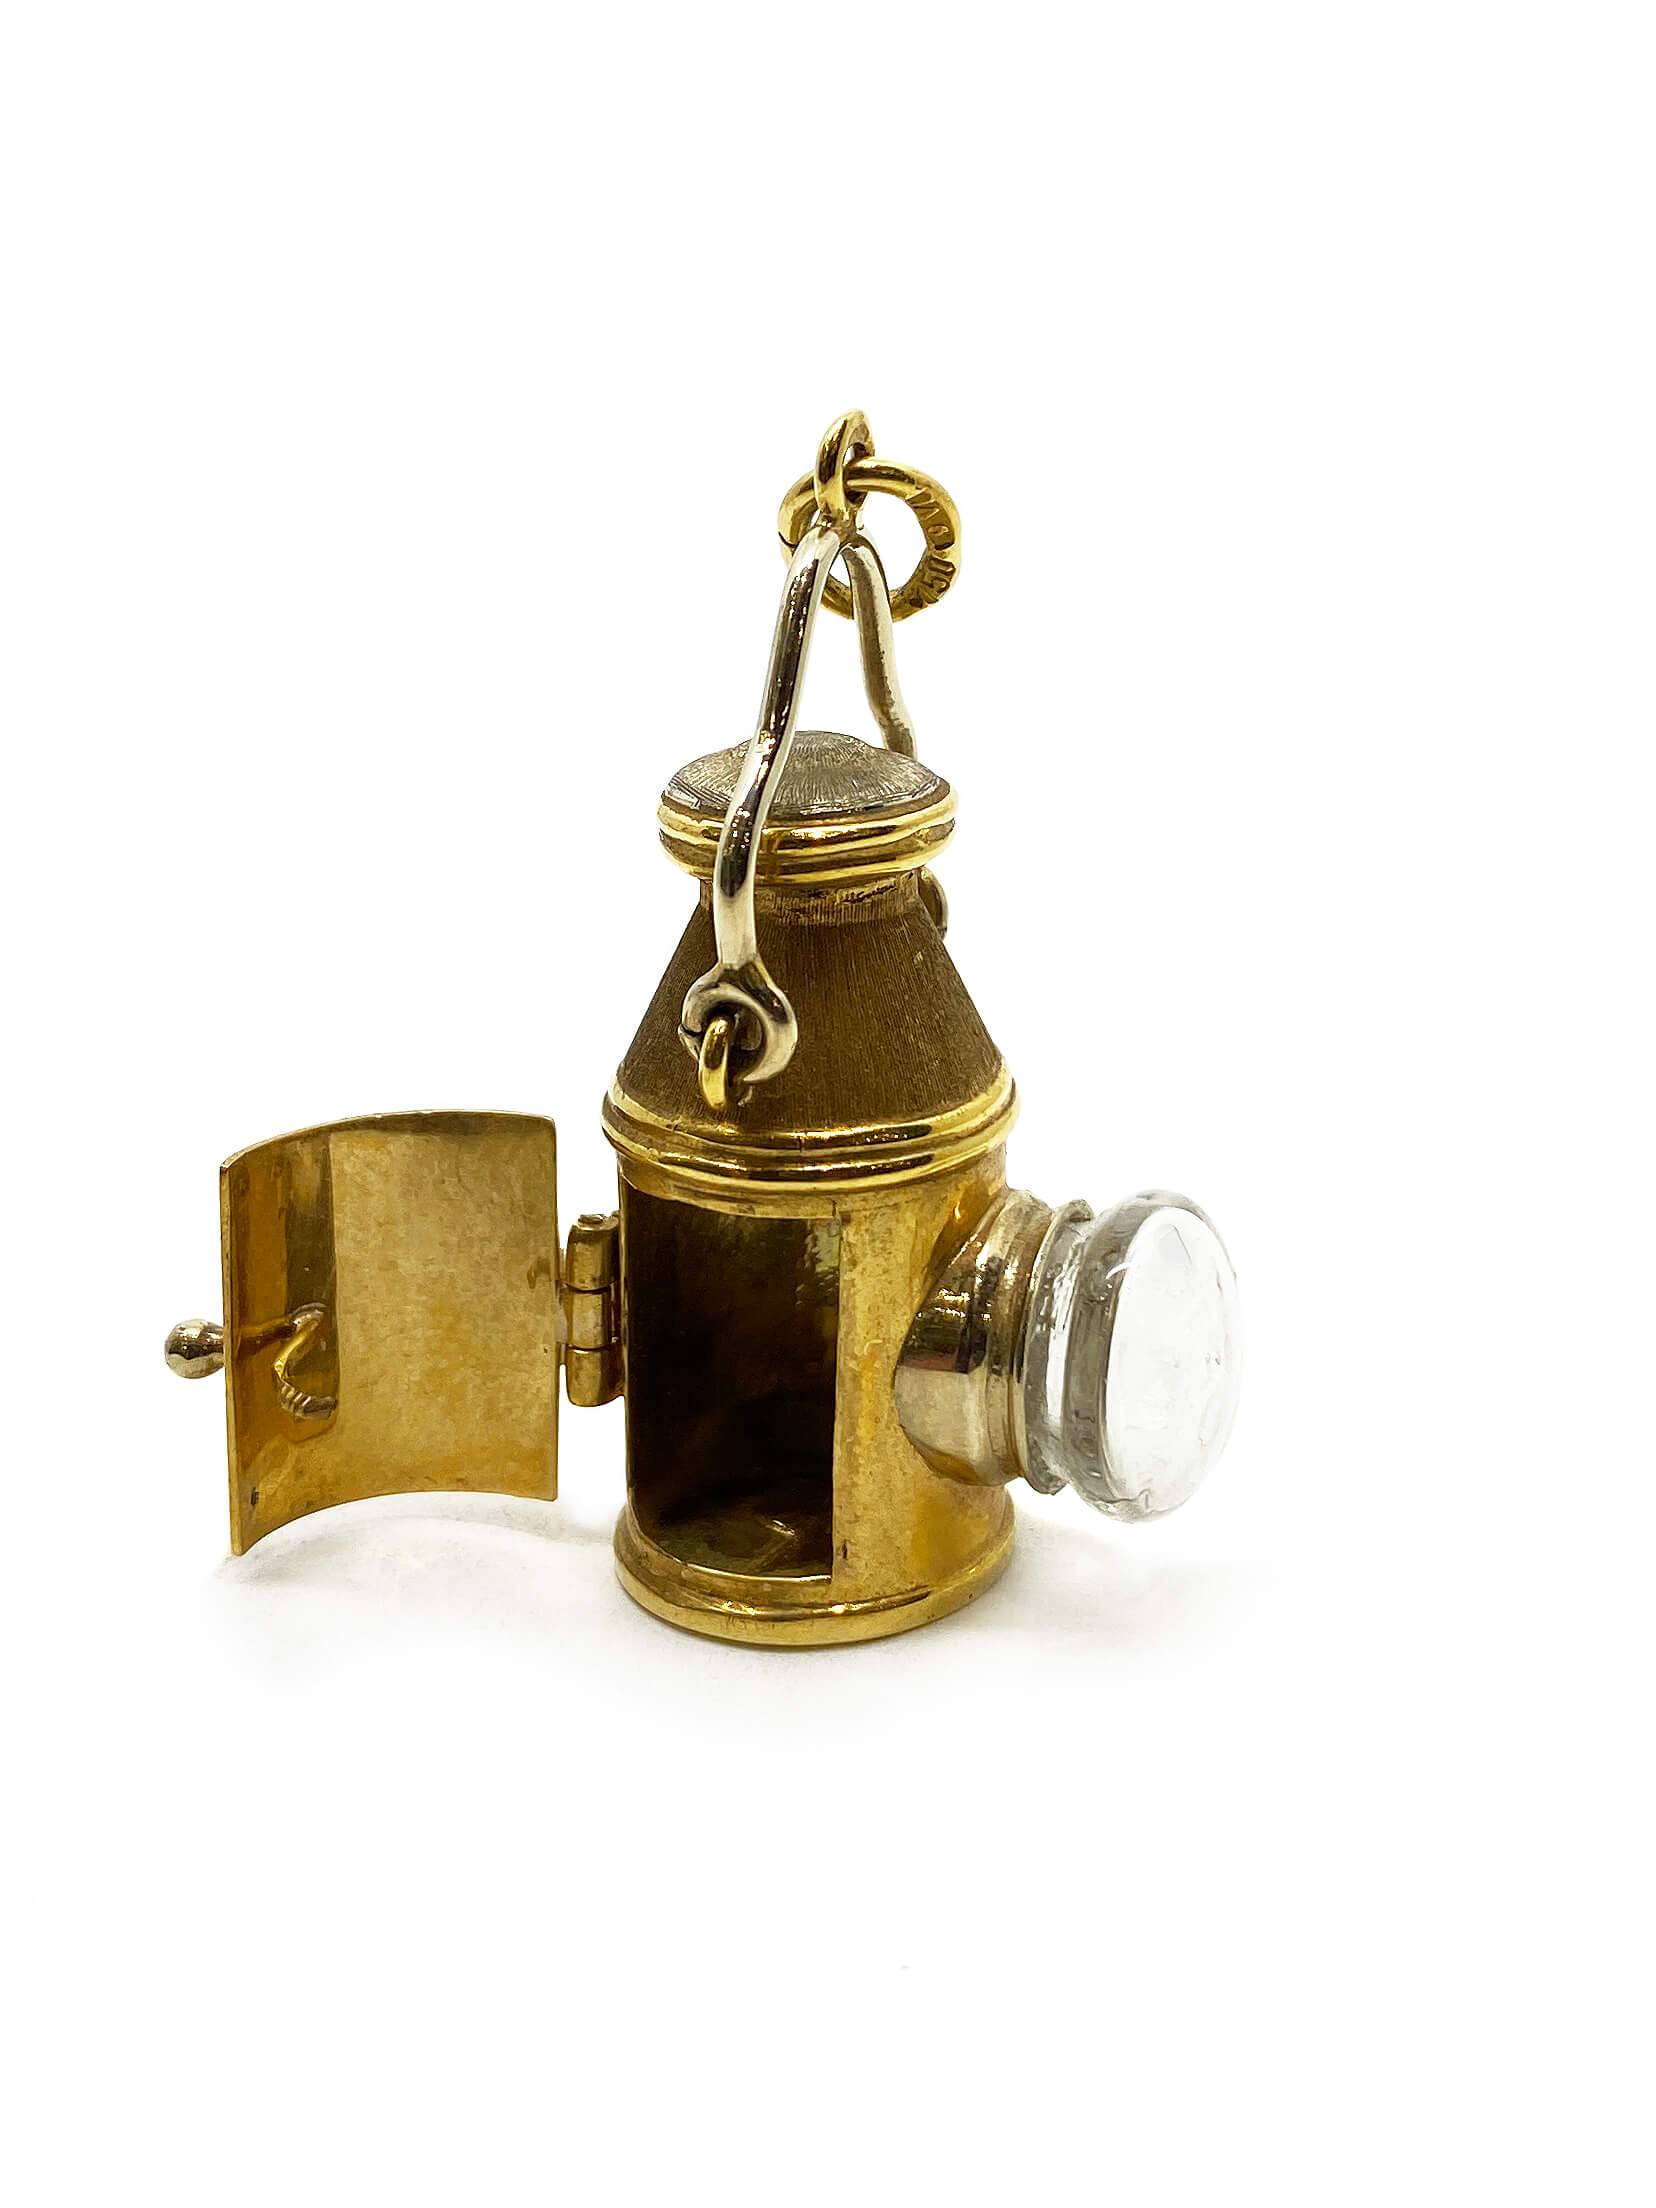 18ct Yellow Gold “Railway Lantern” Pendant